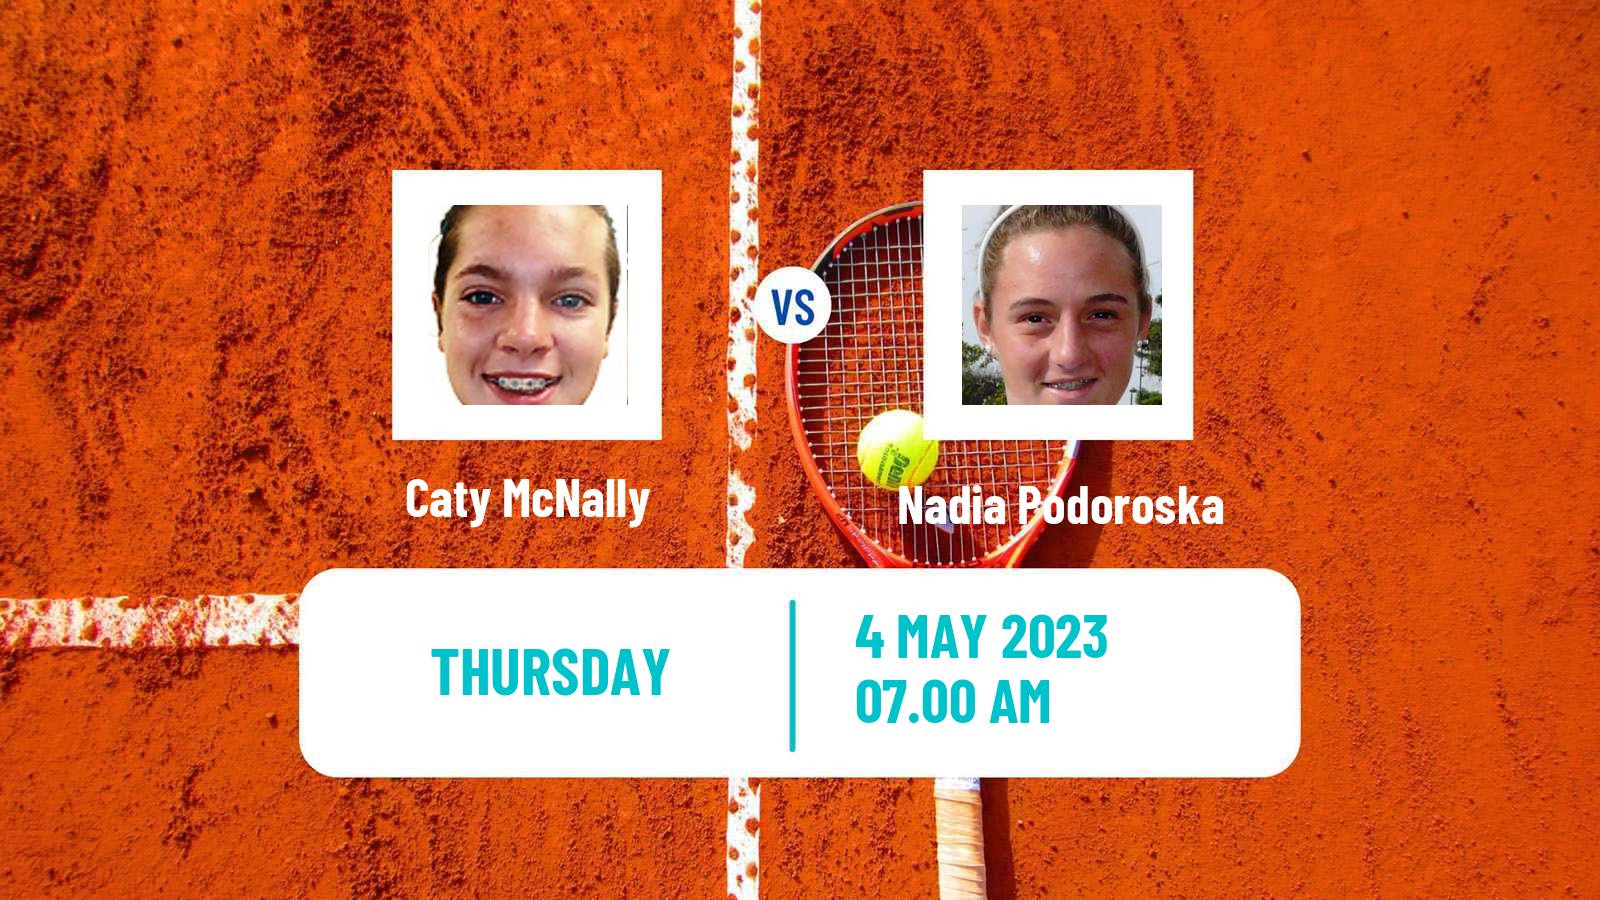 Tennis ATP Challenger Caty McNally - Nadia Podoroska